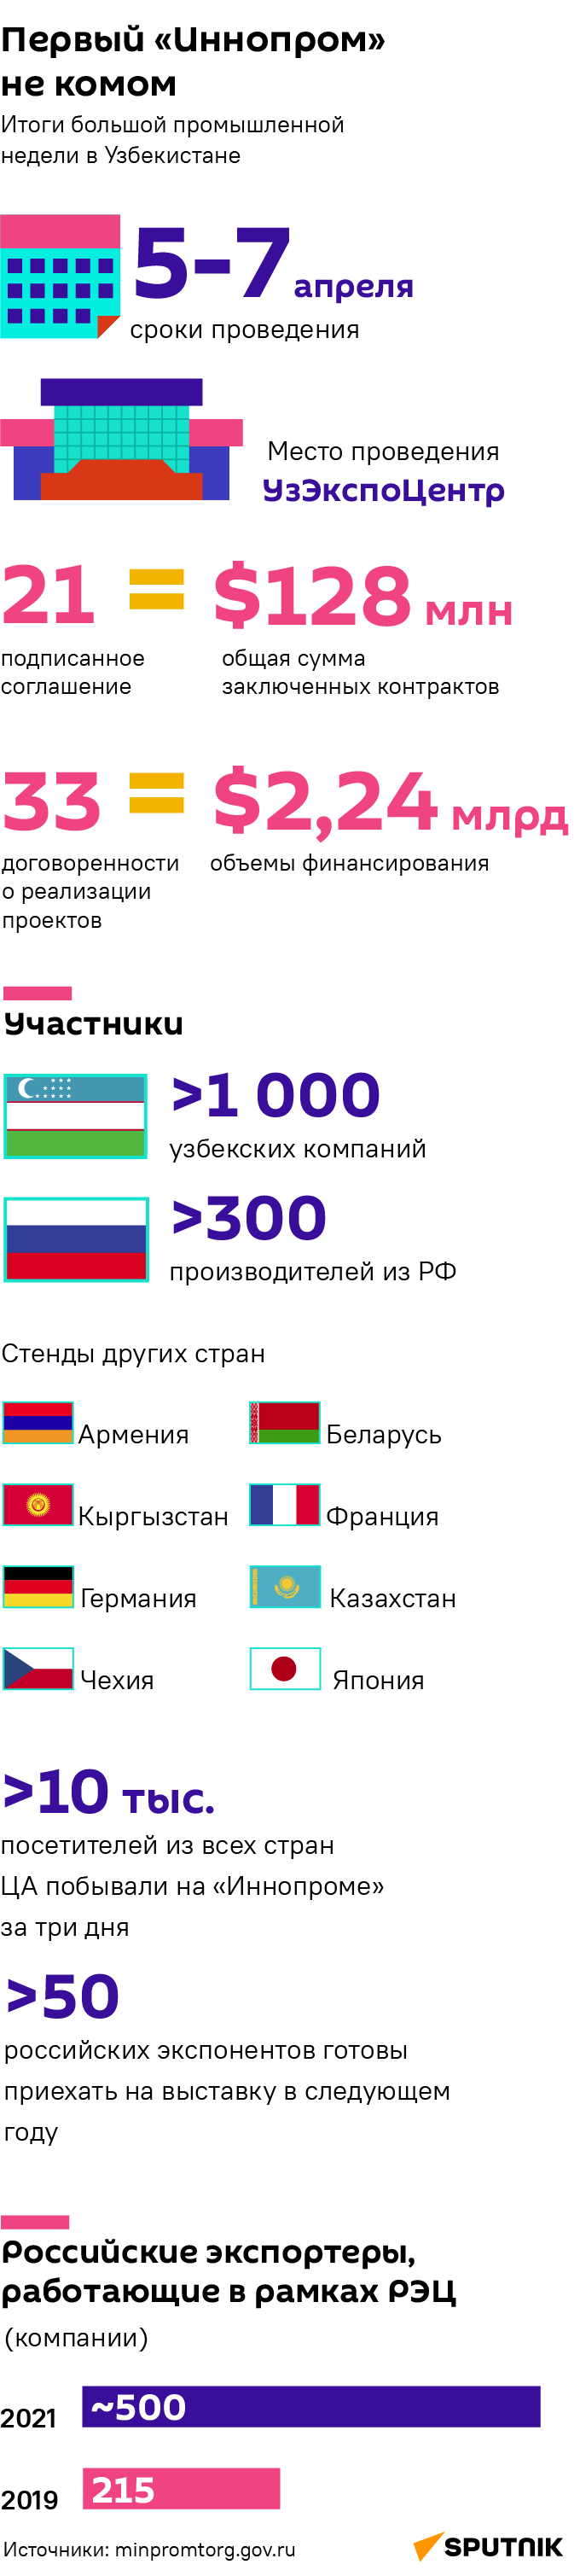 Иннопром - Sputnik Узбекистан